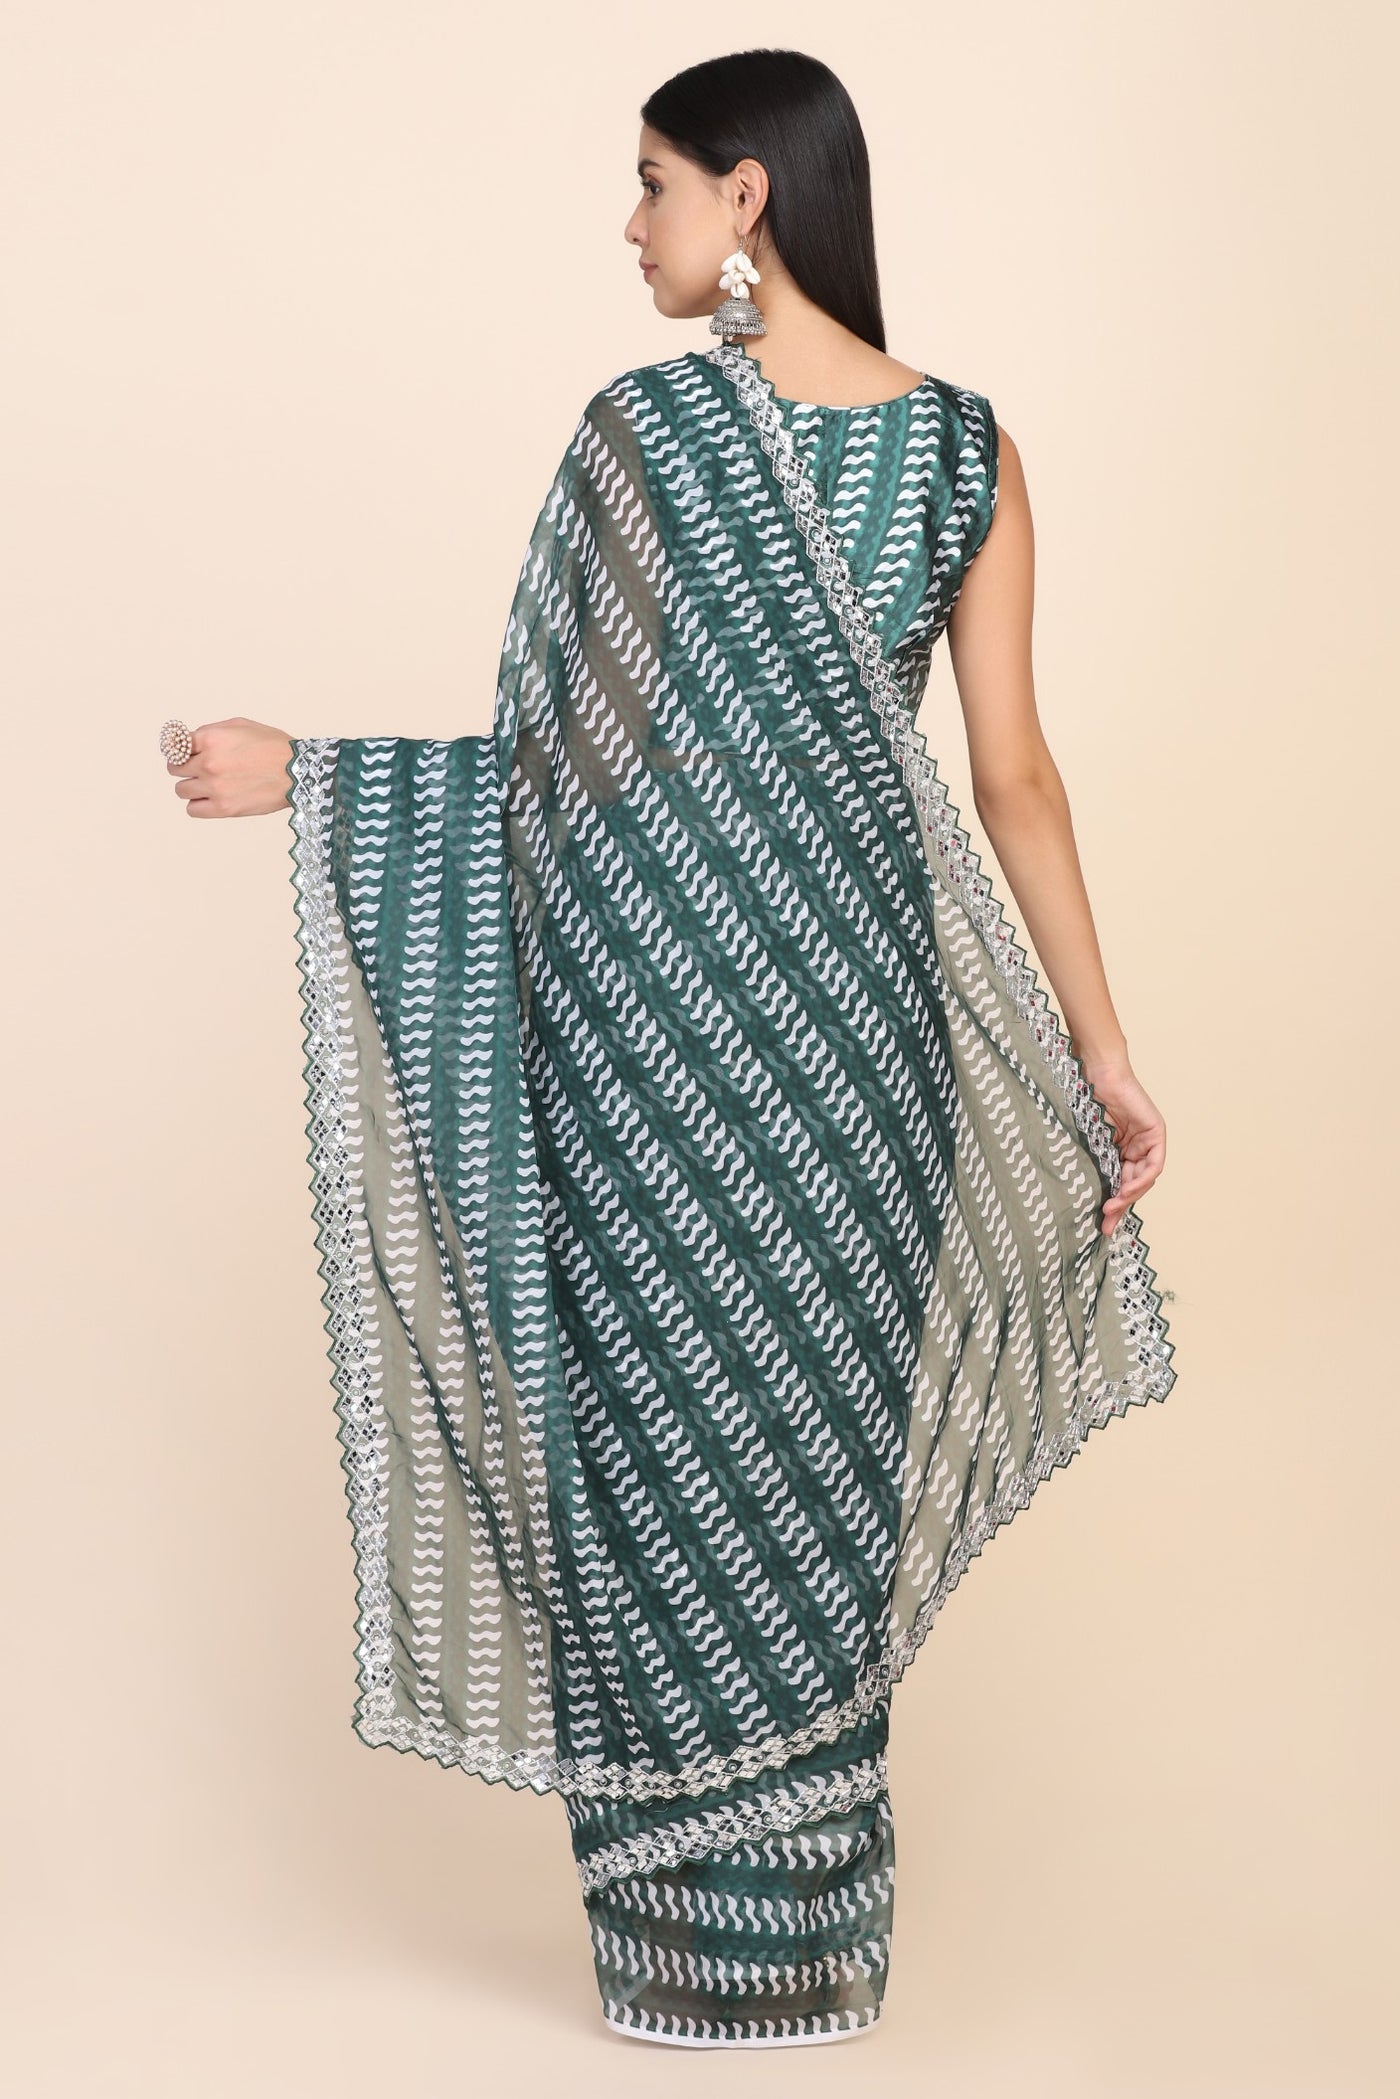 Adorable green color geometric printed saree